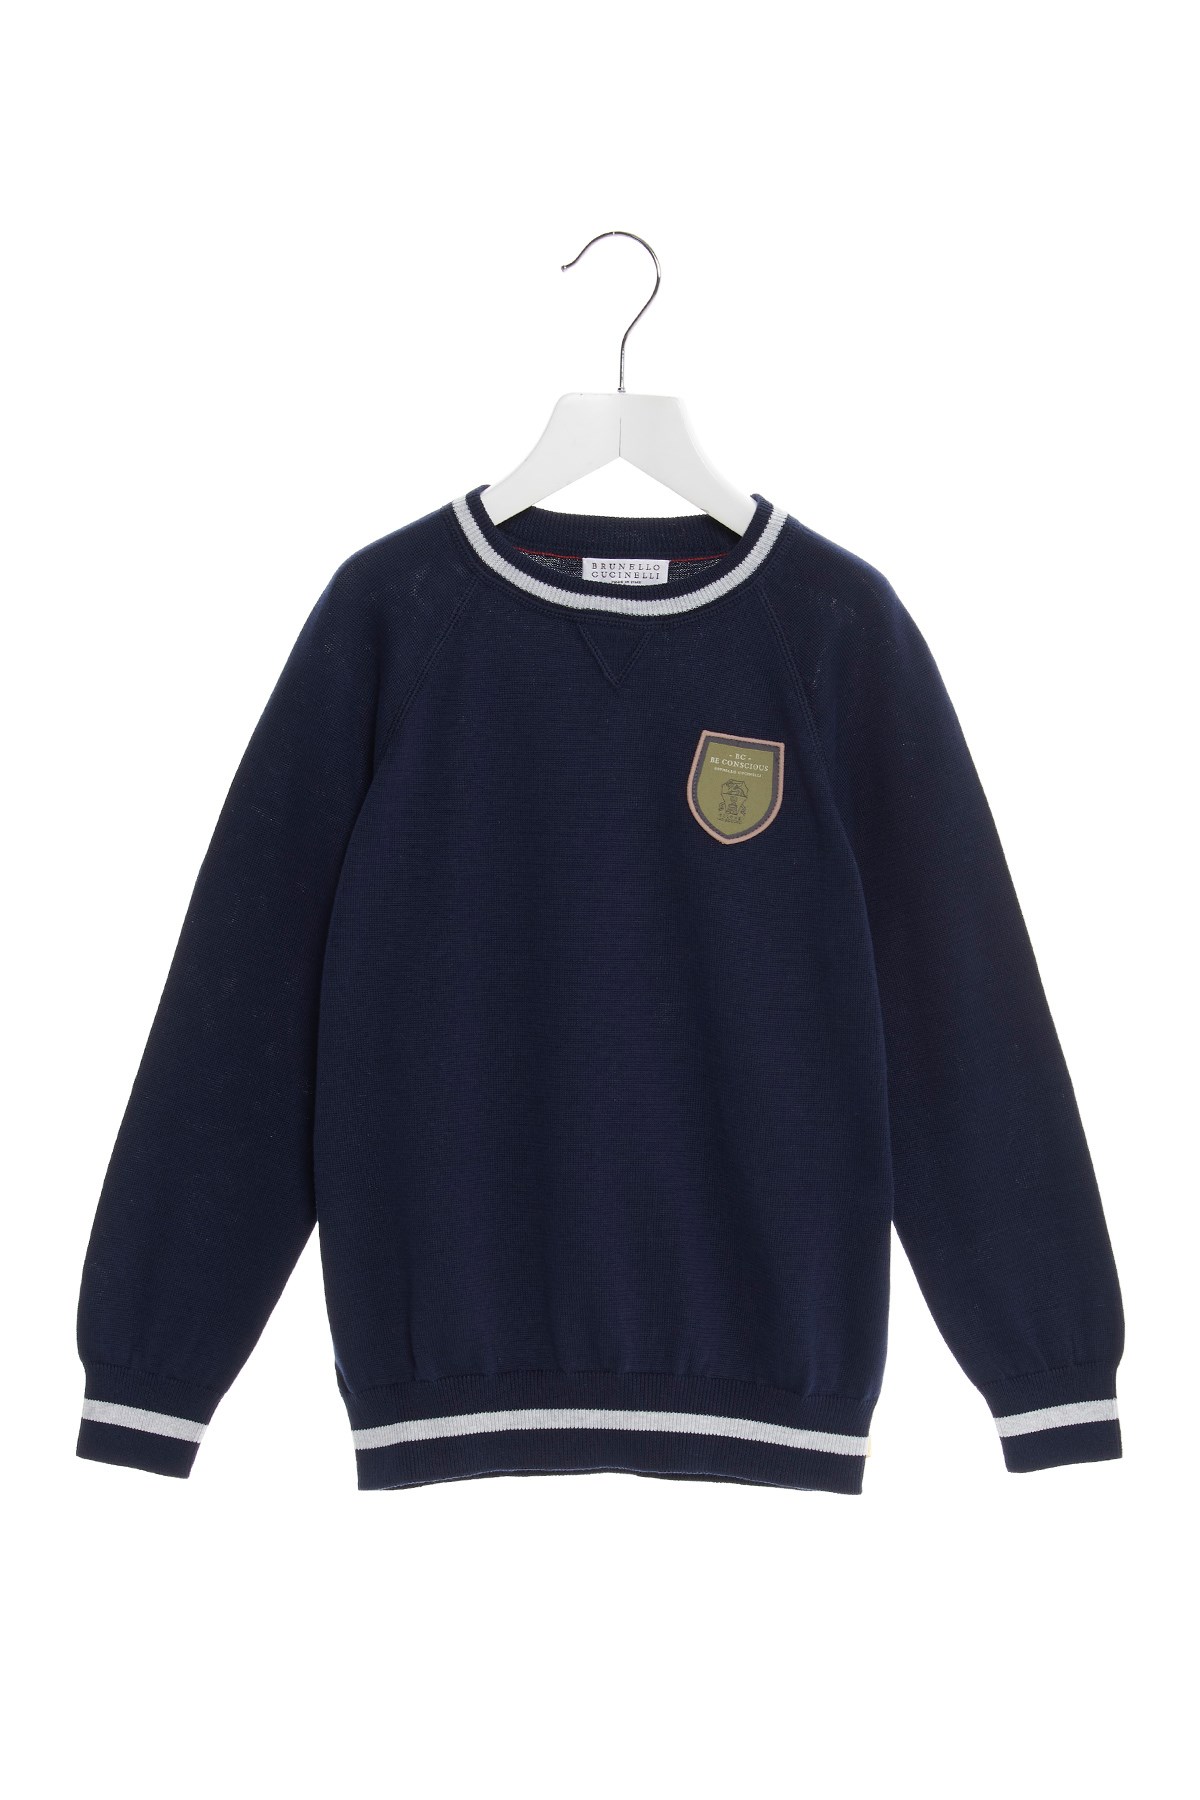 BRUNELLO CUCINELLI Logo Patch Sweater